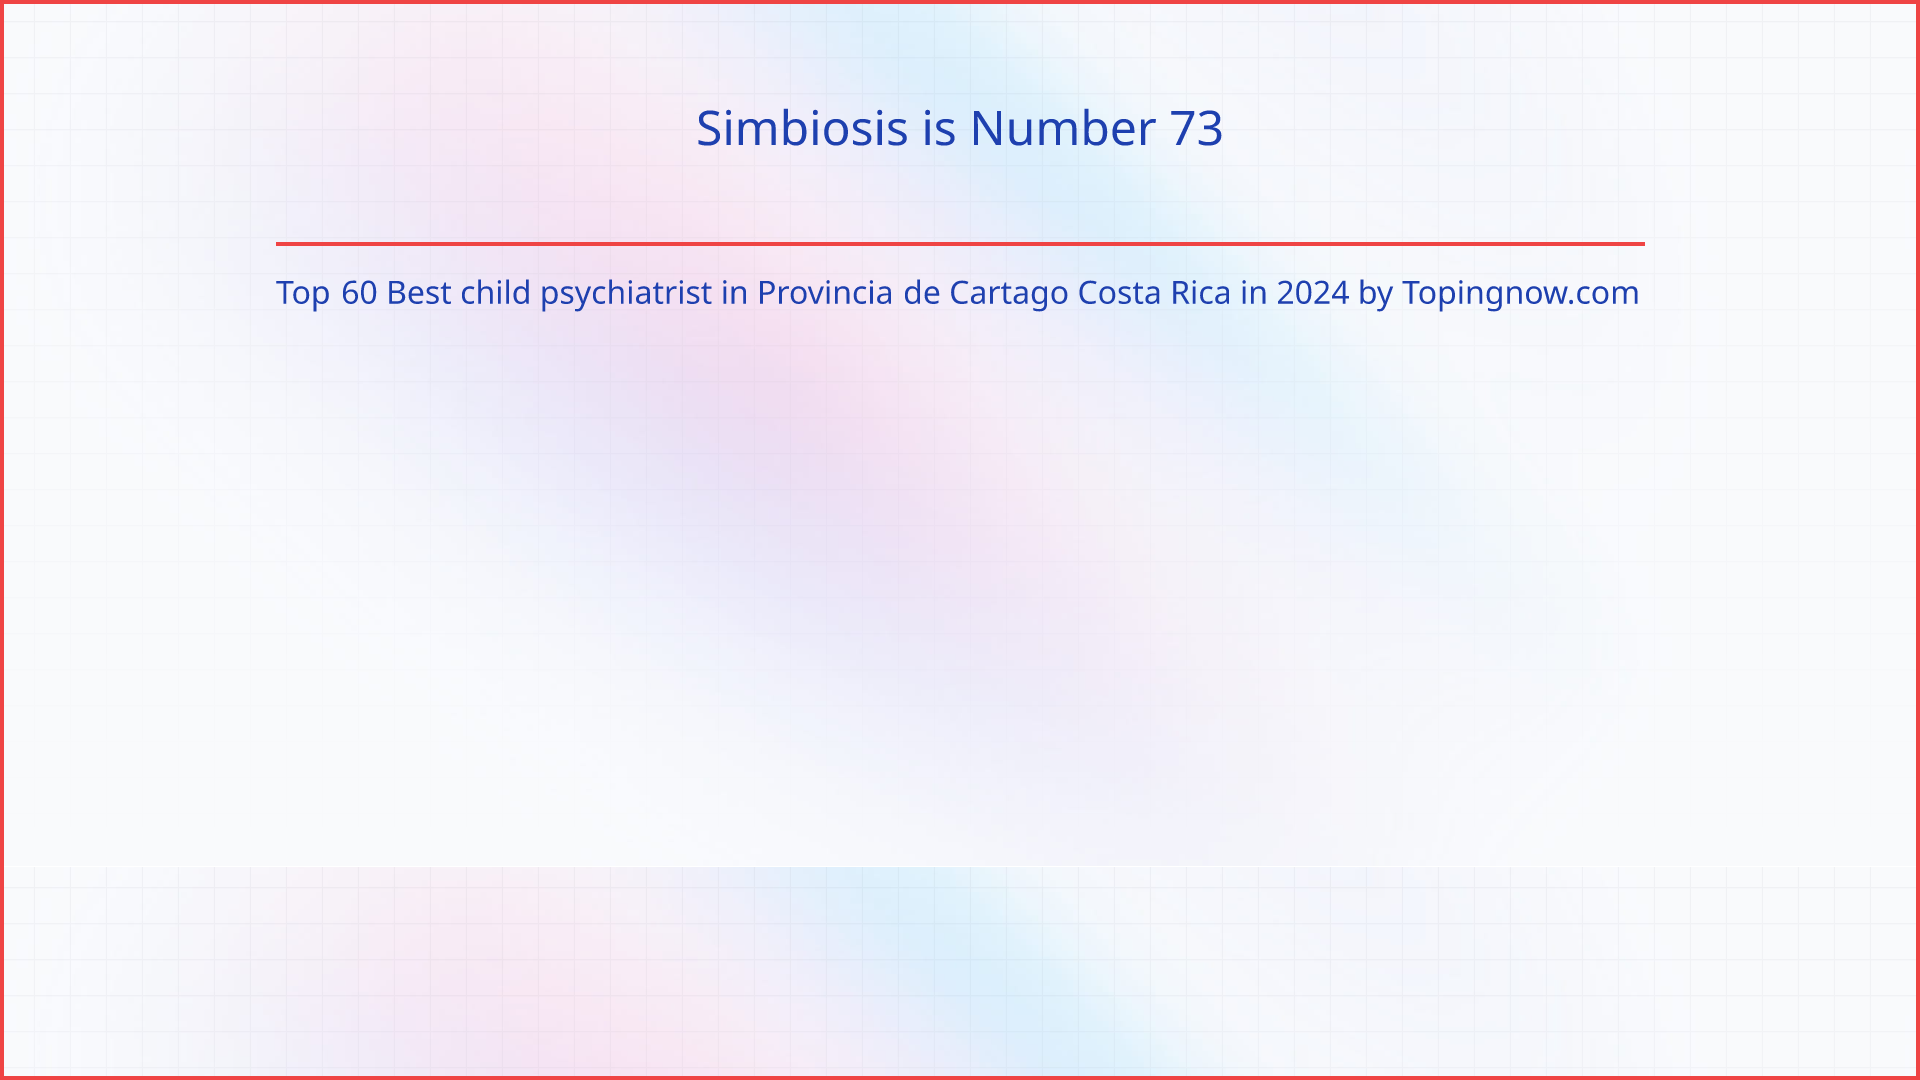 Simbiosis: Top 60 Best child psychiatrist in Provincia de Cartago Costa Rica in 2024